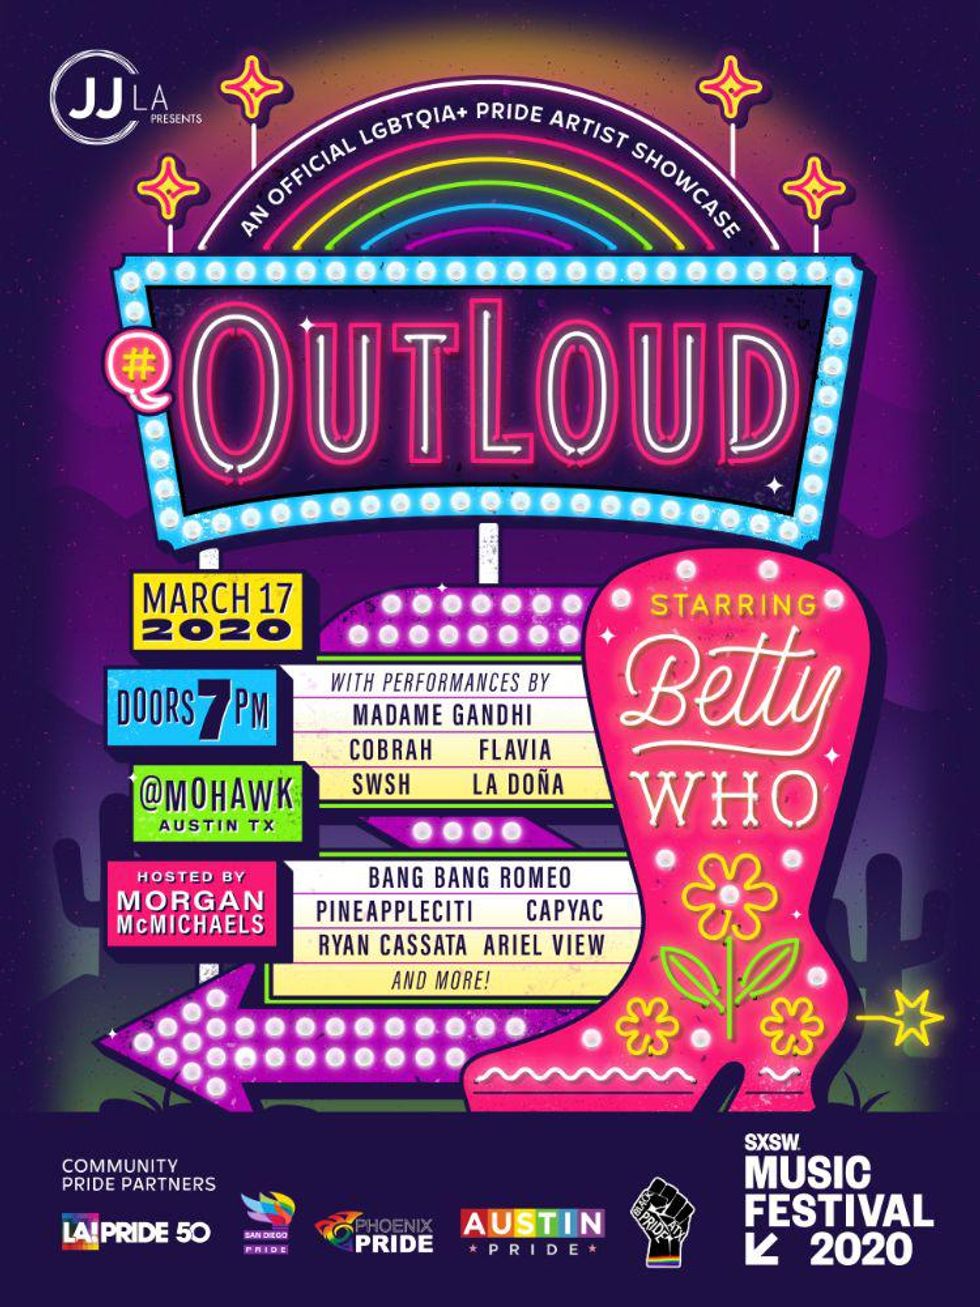 SXSW Hosts First Ever LGBTQ+ Pride Artist Showcase #OUTLOUD